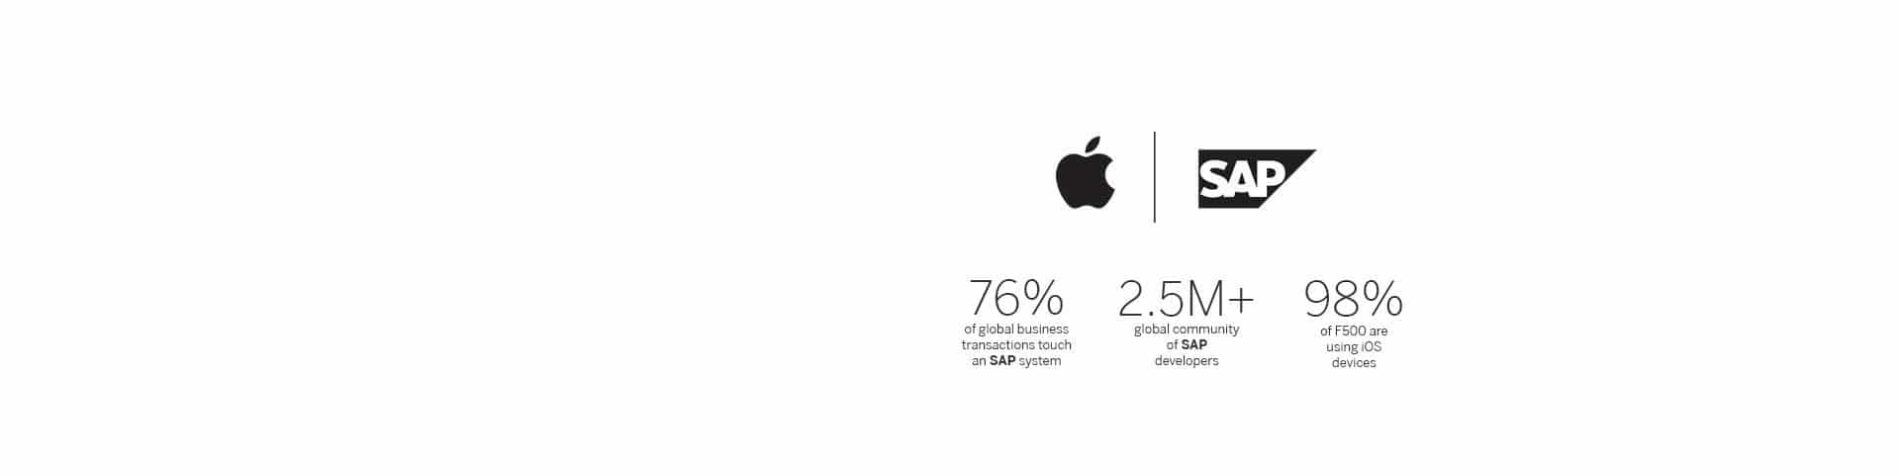 Apple & SAP Partner to Revolutionize Work on iPhone & iPad